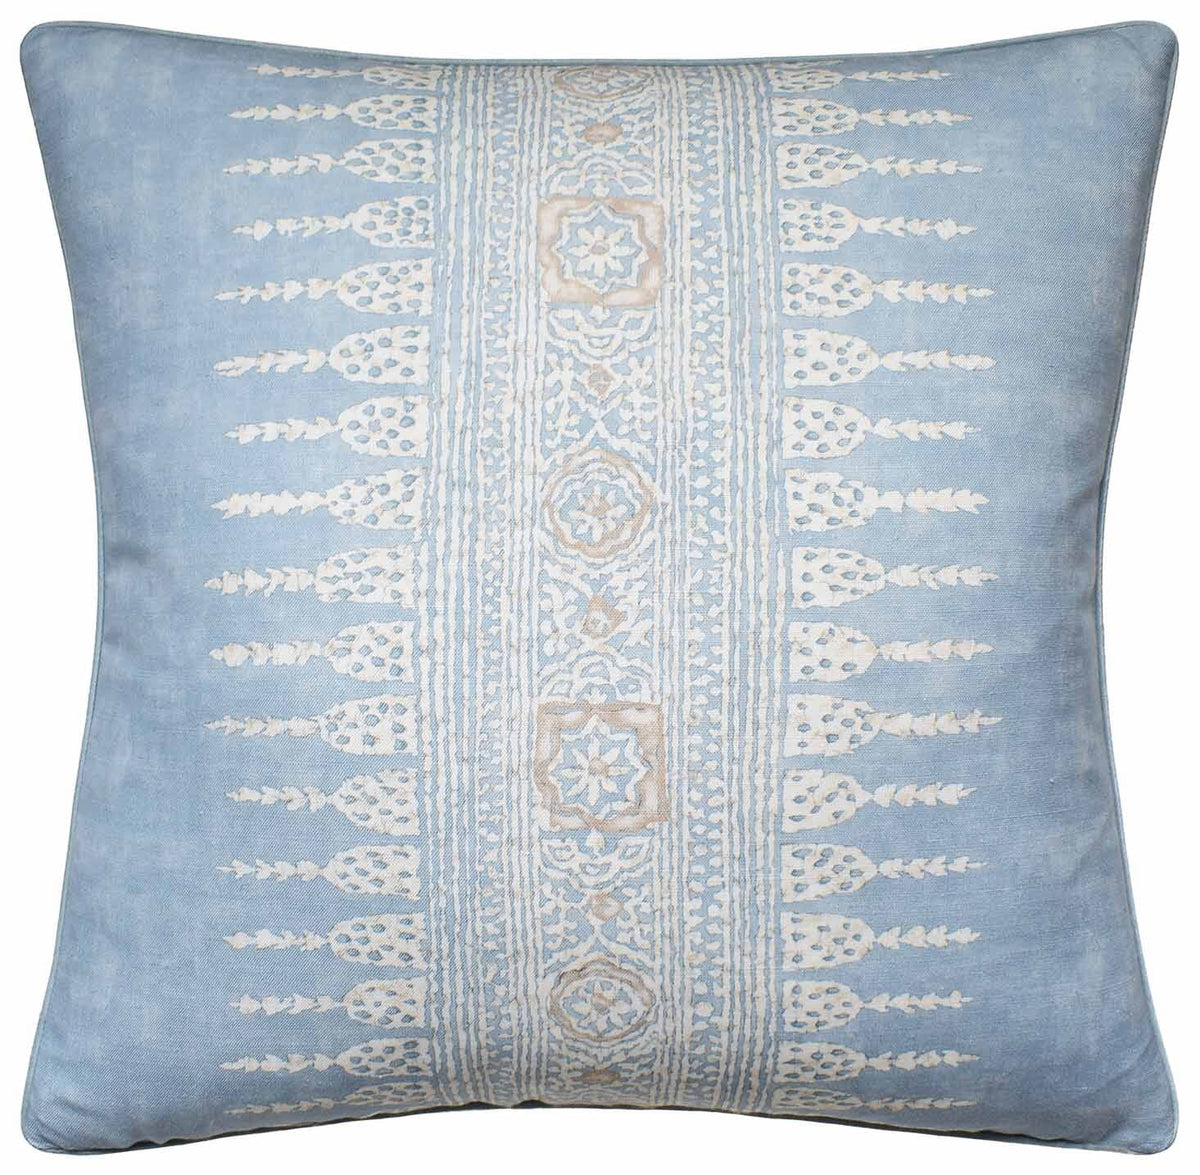 Javanese Stripe Spa Blue Decorative Pillow - Ryan Studio Throw Pillow in Thibaut Fabrics Anna French